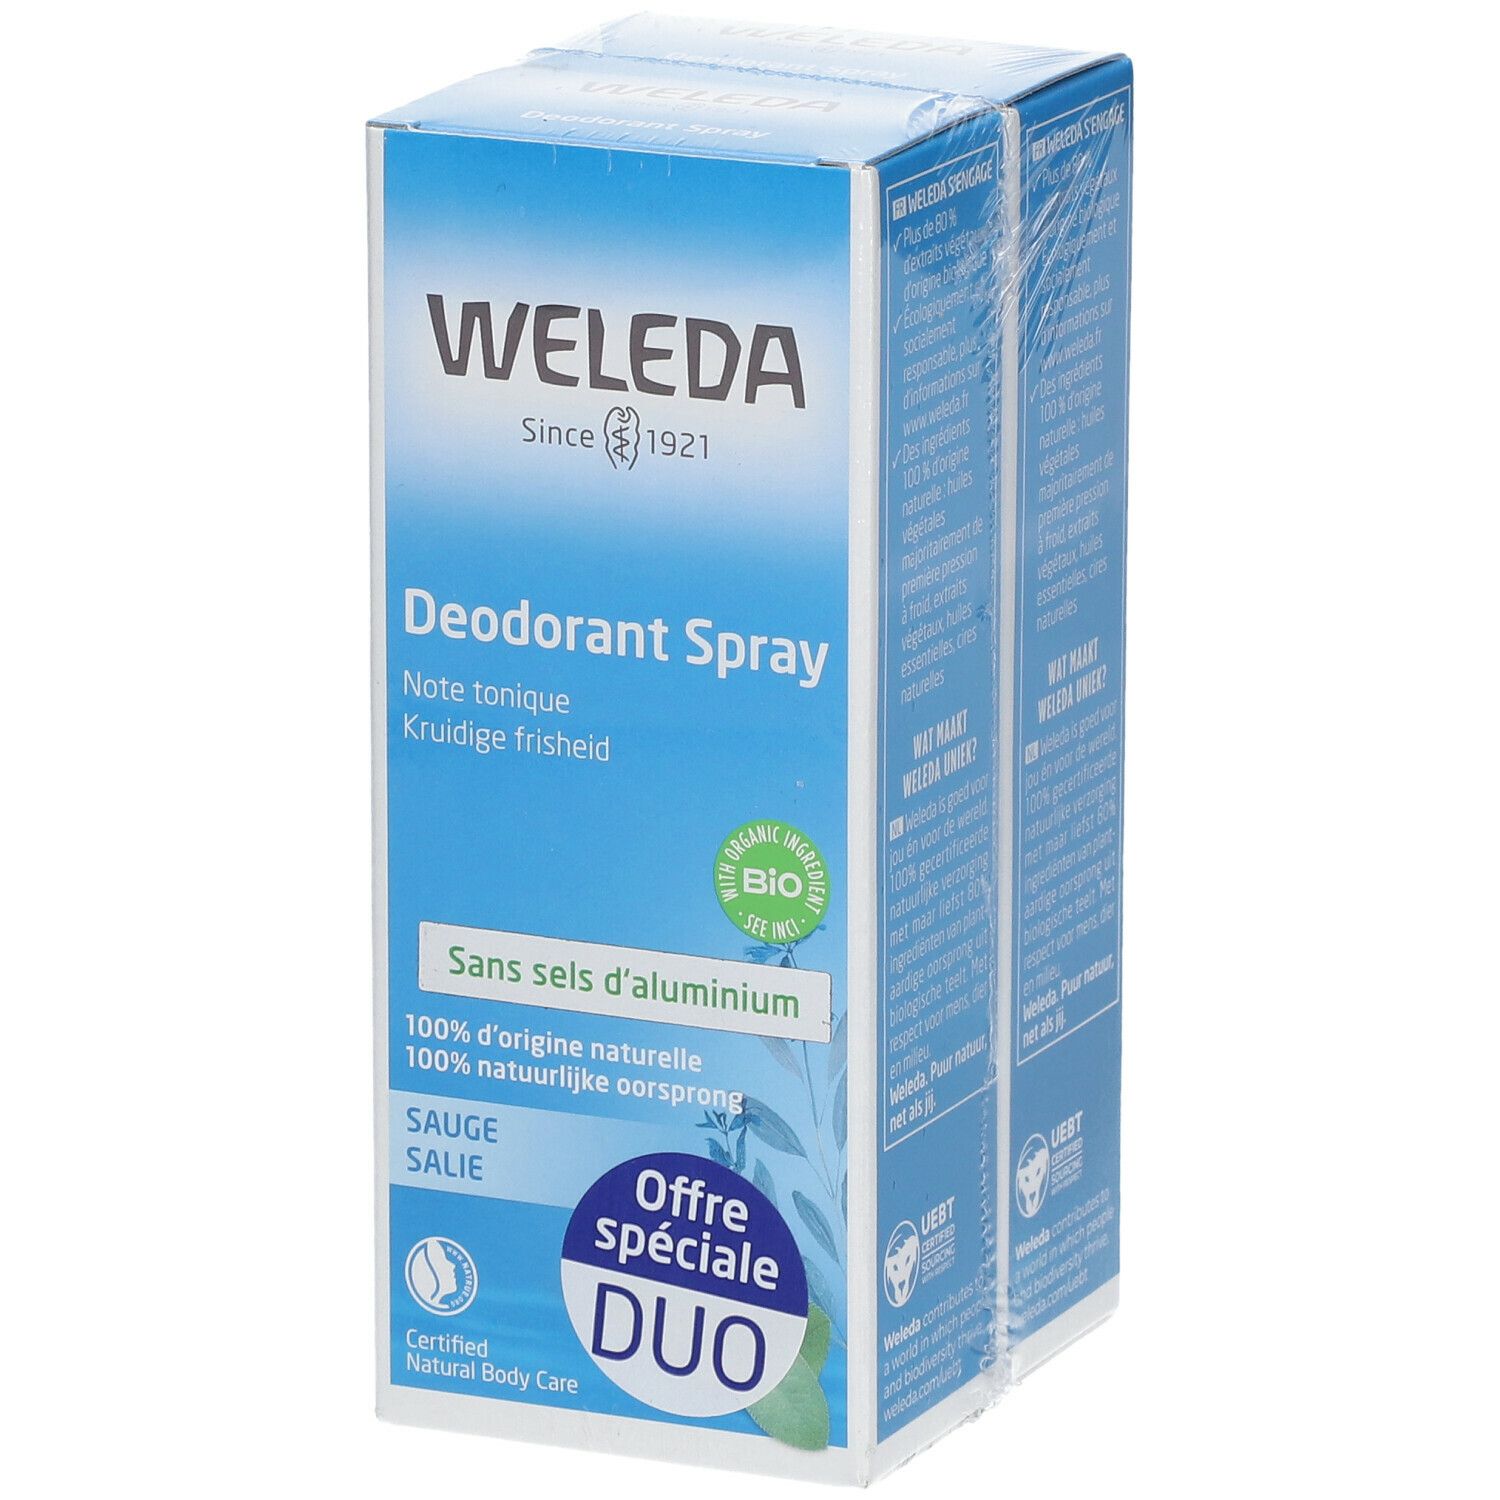 Weleda Sauge Déodorant Spray Duo